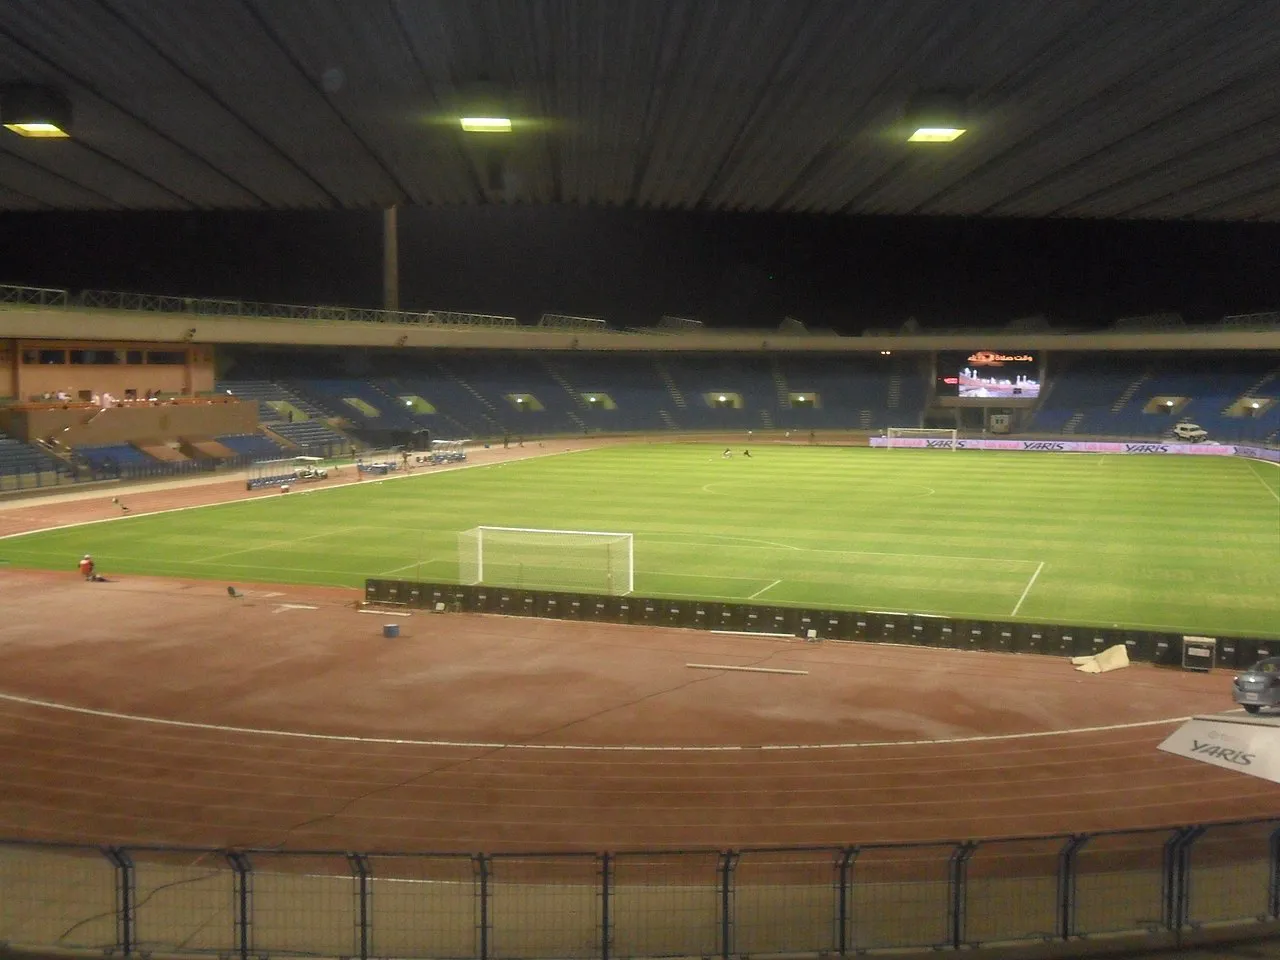 Prince Mohamed bin Fahd Stadium